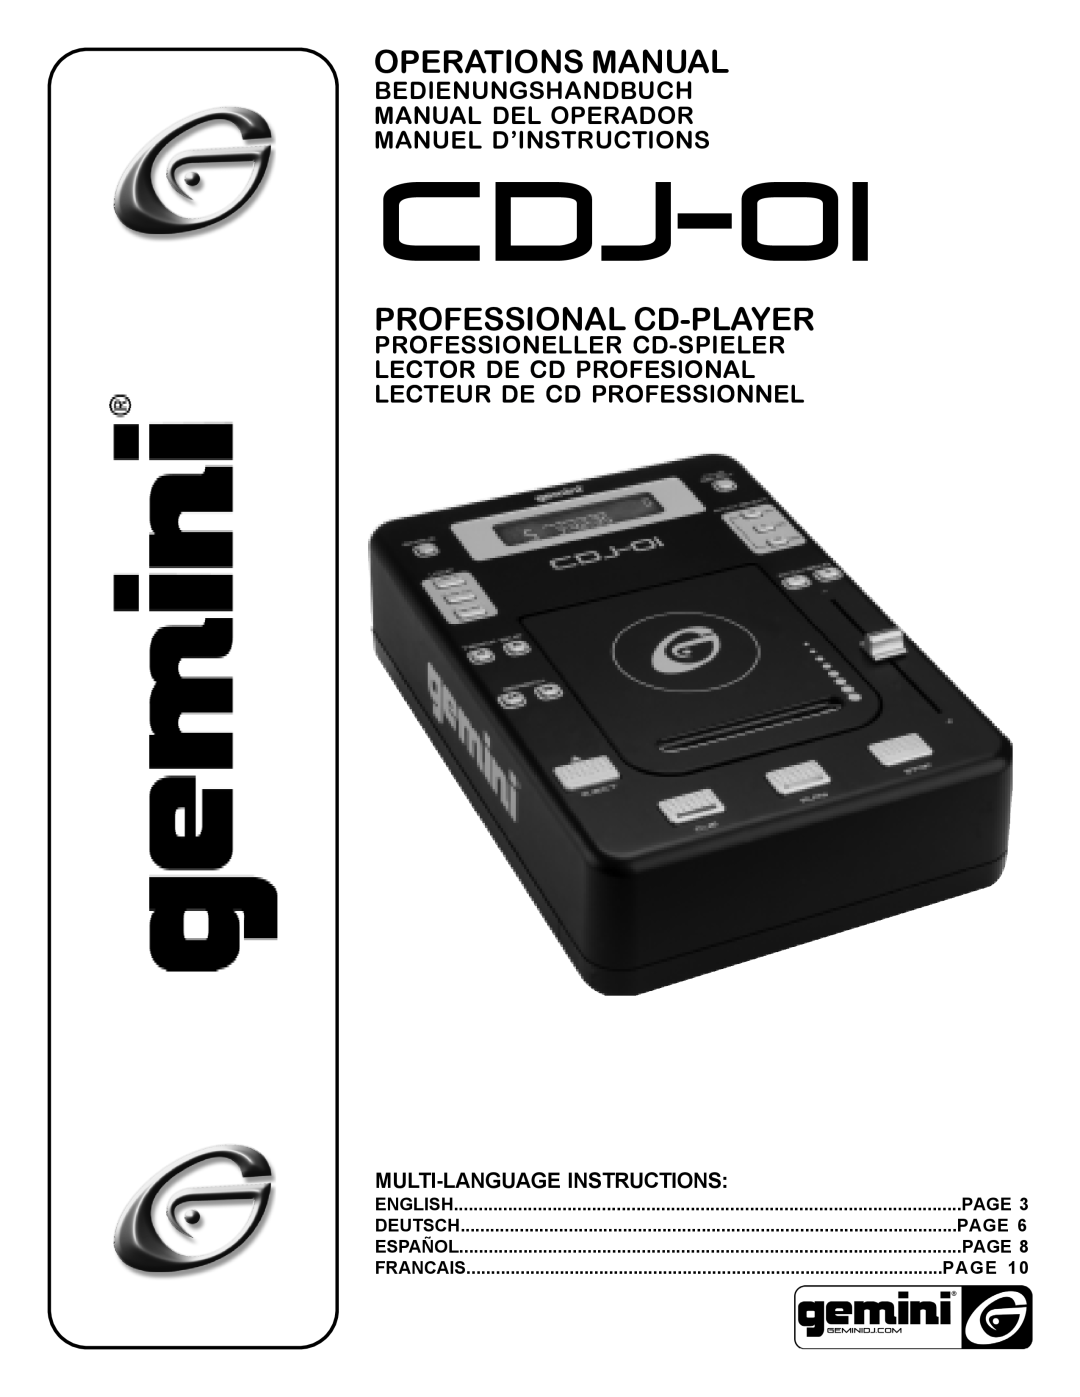 Gemini CDJ-0I manual Multi-Languageinstructions, Operations Manual, Professional Cd-Player, Manuel D’Instructions, English 